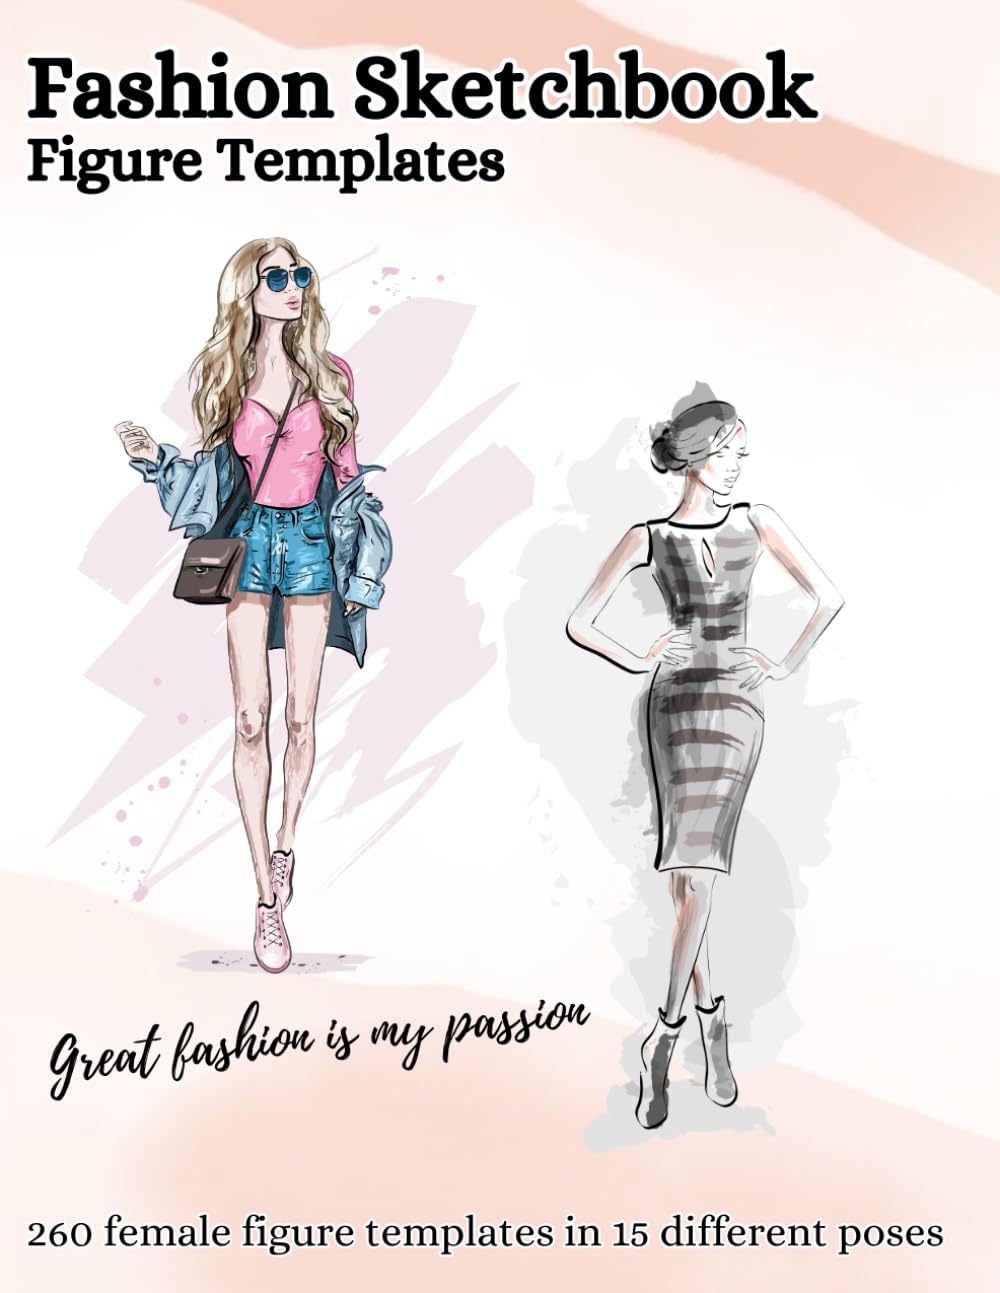 Fashion Sketchbook Figure Templates